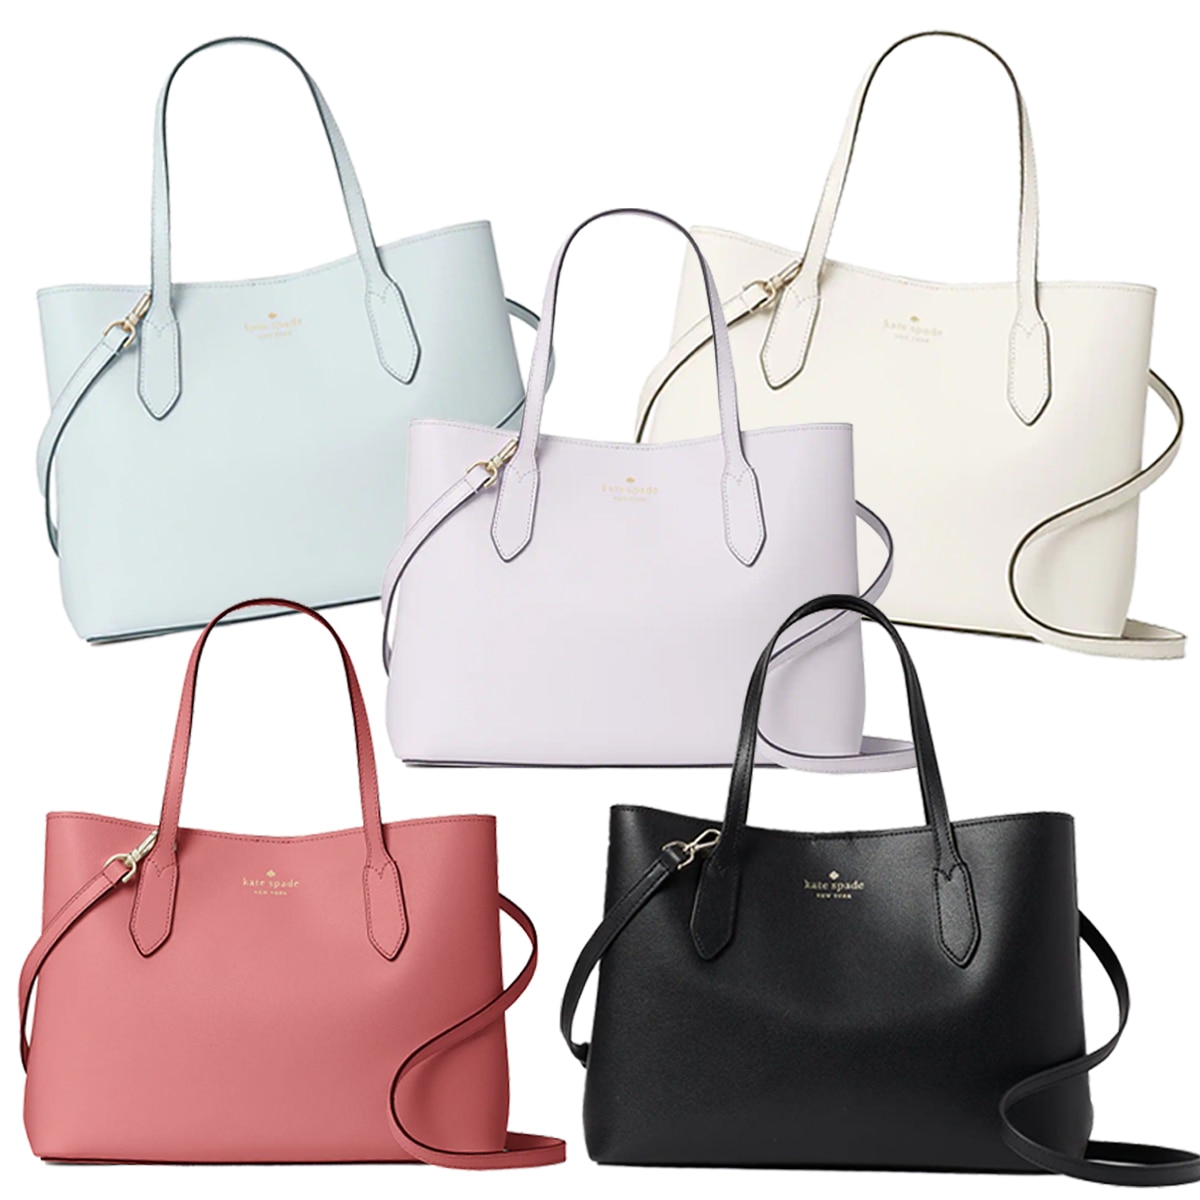 Buy Kate Spade Breanna Leather Tote Shoulder Bag Purse Handbag (CORAL BUDS)  at Amazon.in